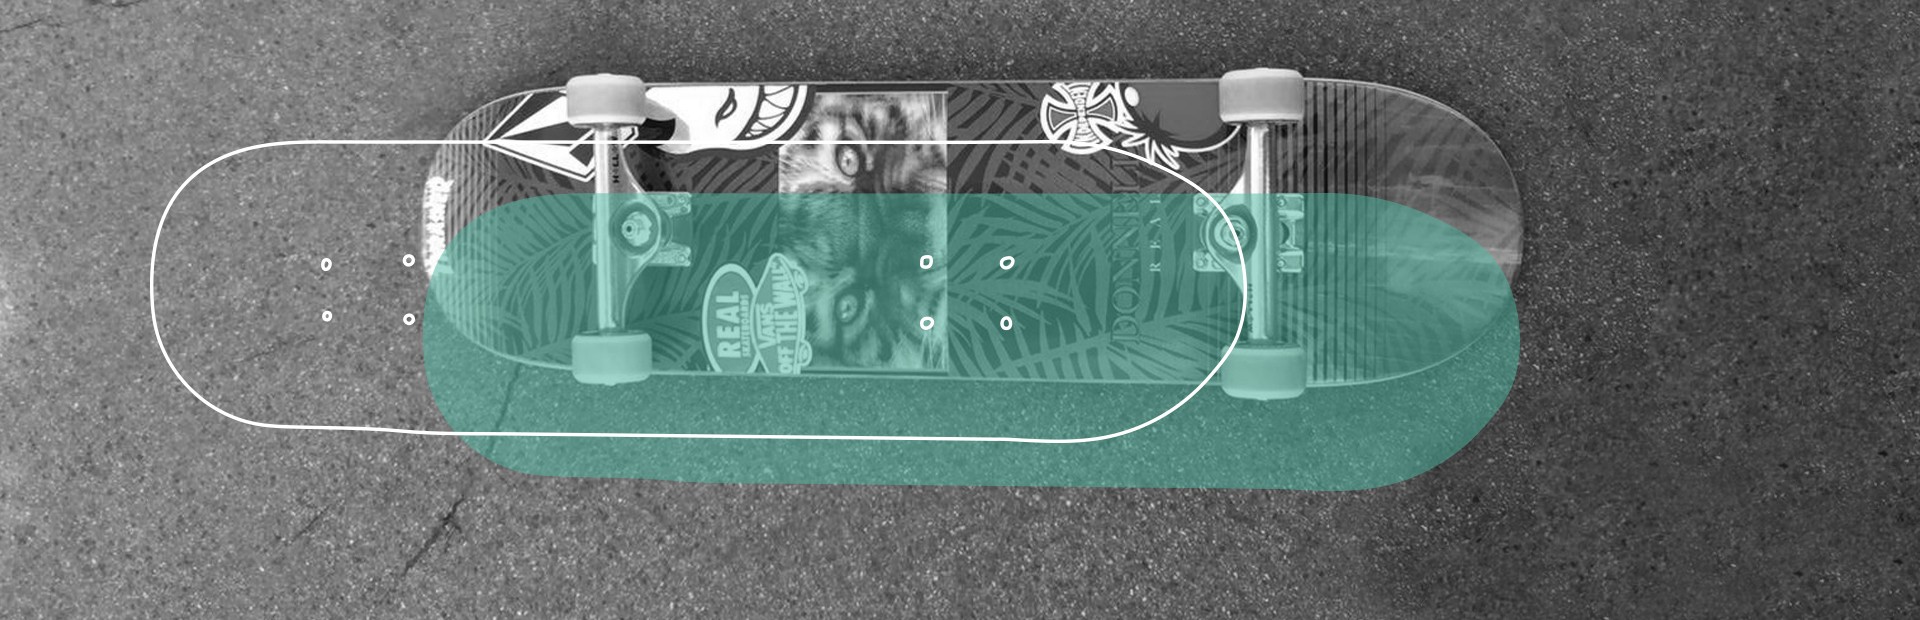 Skateboard-deck closeup